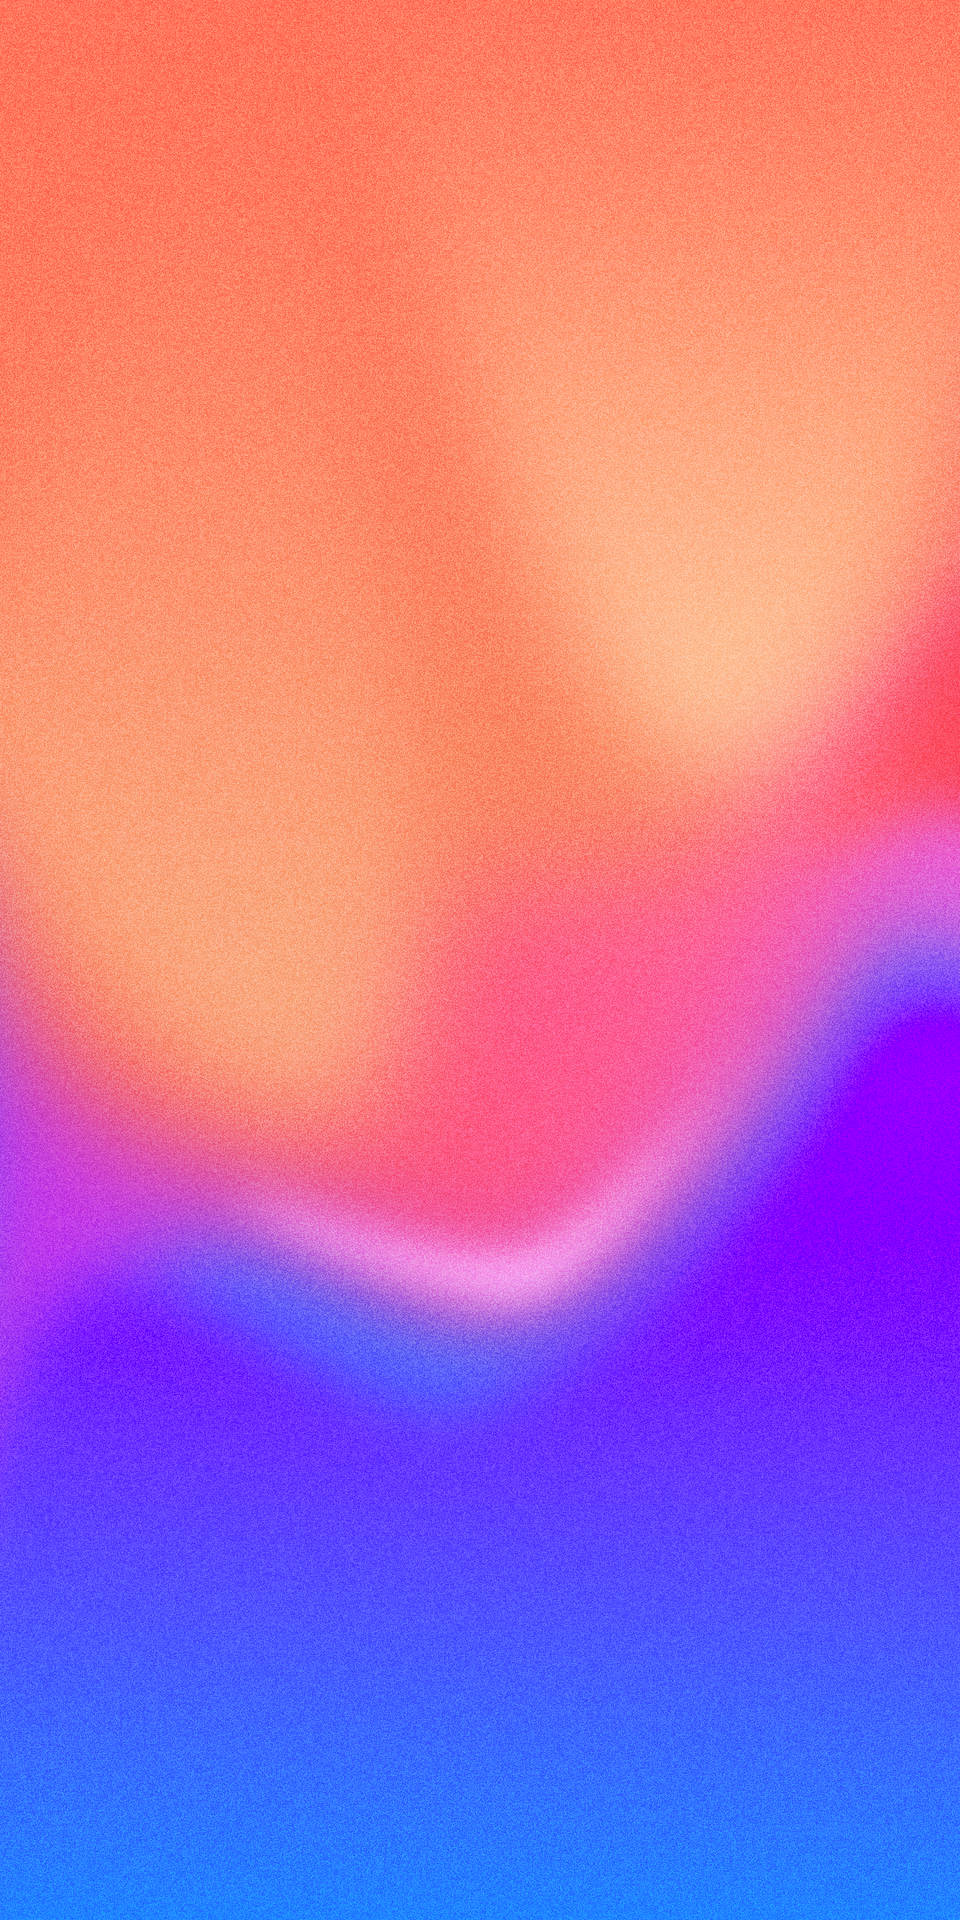 Gradientblur Abstrakt Oppo A5s Wallpaper